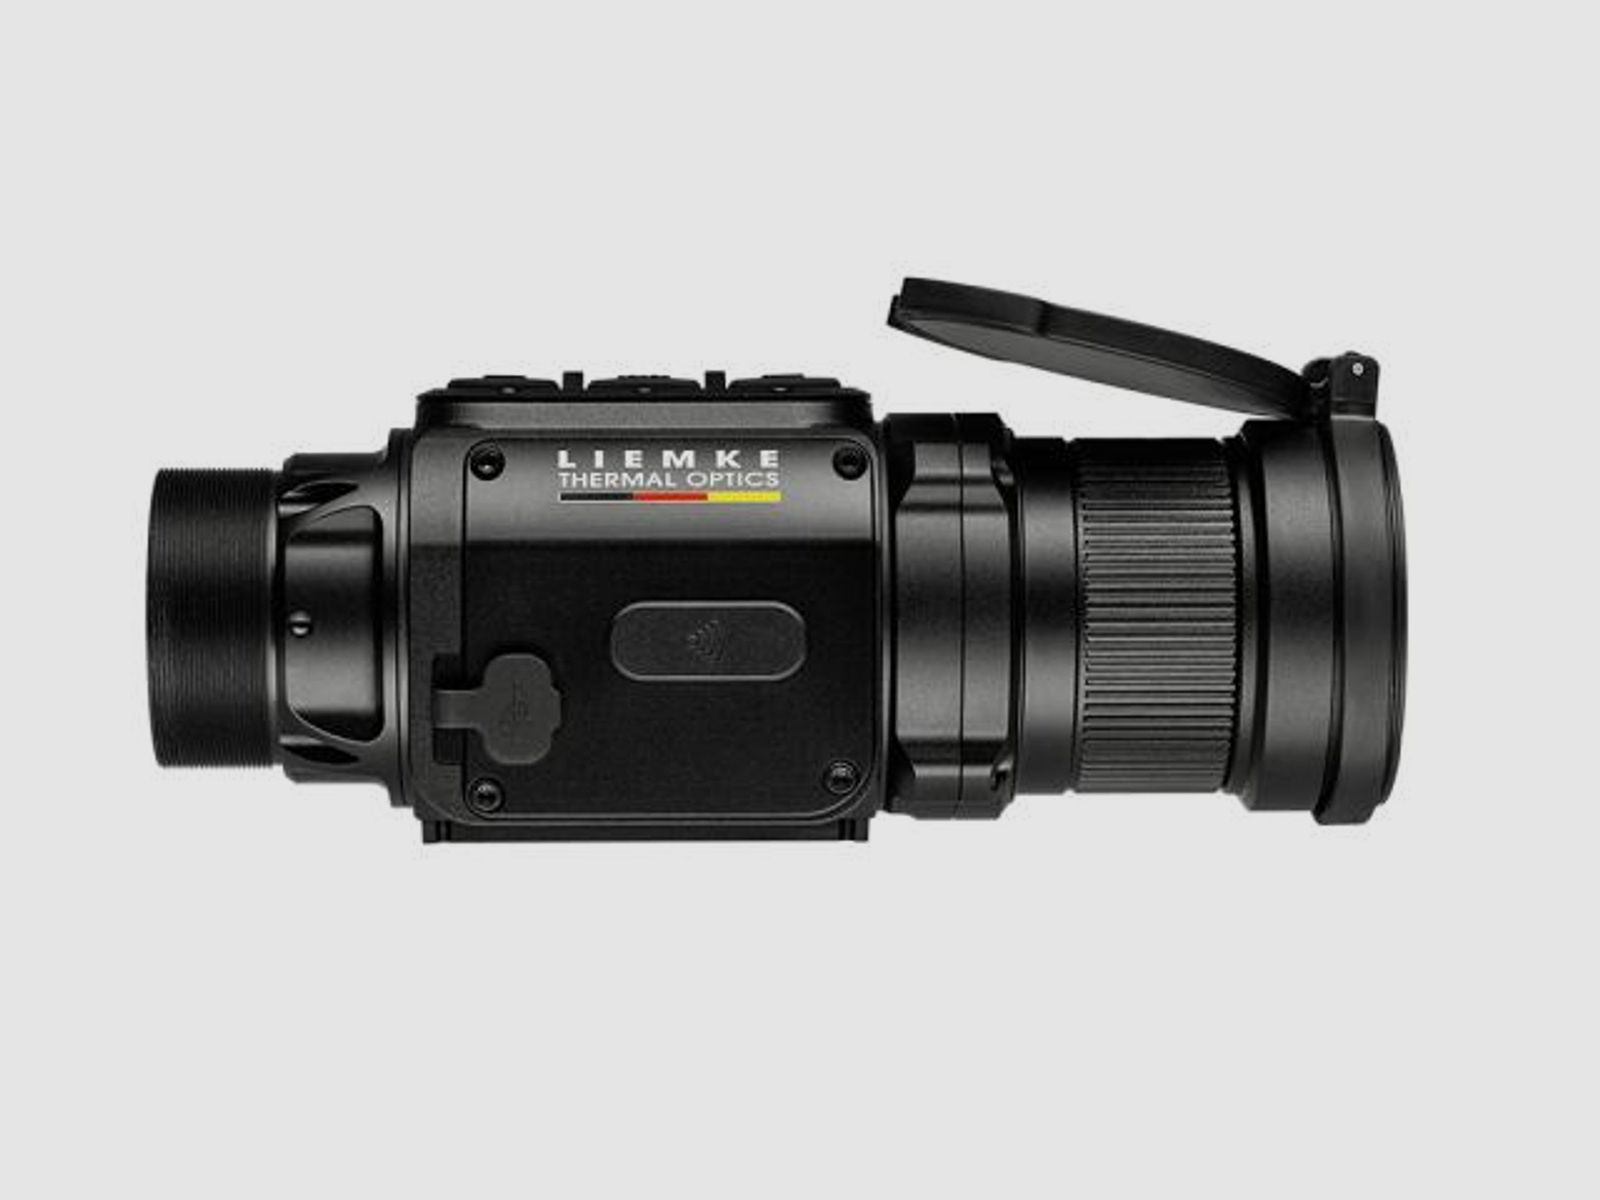 LIEMKE Optik Wärmebild-Kamera Luchs -2 Dual-Use - Vorsatzgerät